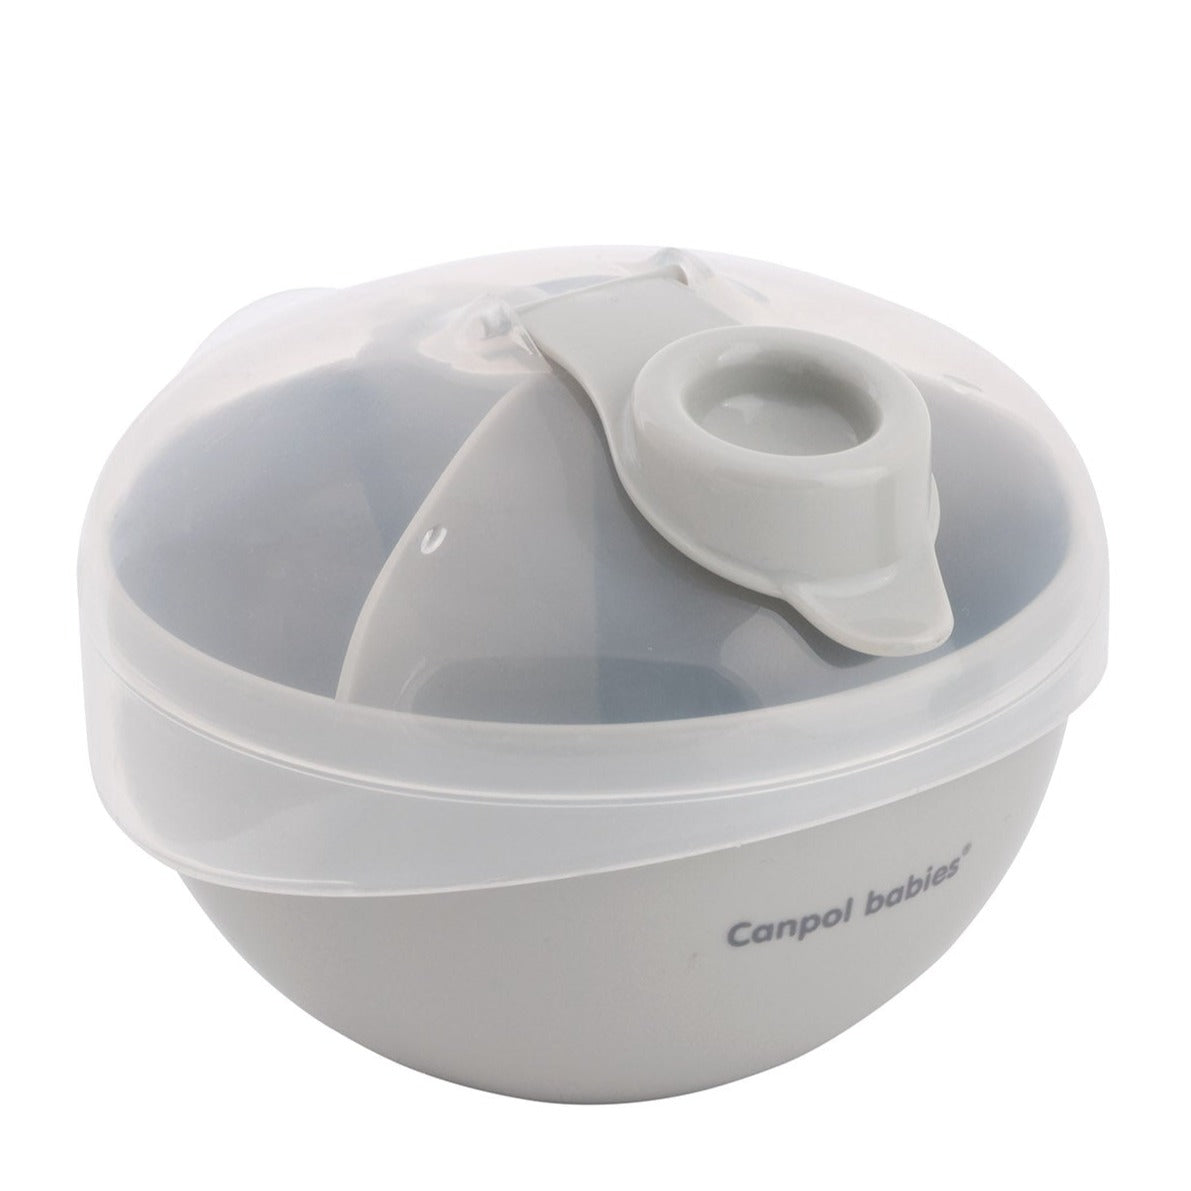 Canpol Babies: Milk Powder Dispenser Gray Milk Powder Dispenser